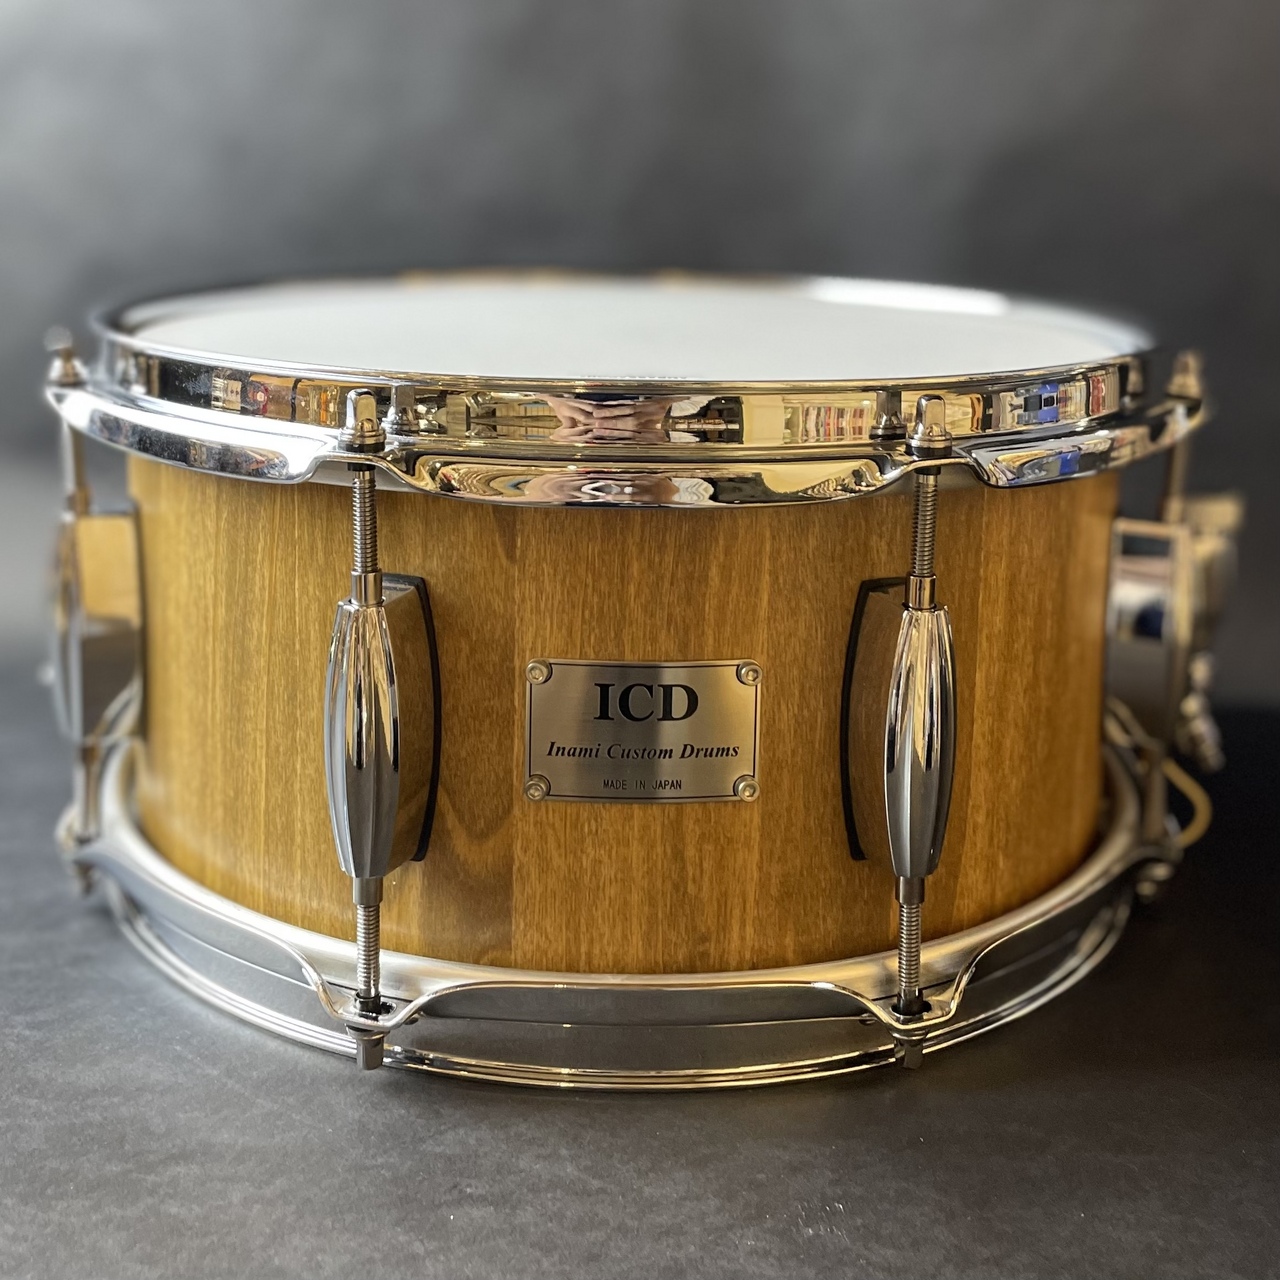 CONTENTSICD(Inami Custum Drums)とはICD Solid Poplar Stave Snare Drum12"×6" ドラムアドバイザーが楽器選びをサポートMyDrumsShopとは？お問い合わせICD(Inami Custum Drums)とは クオ […]